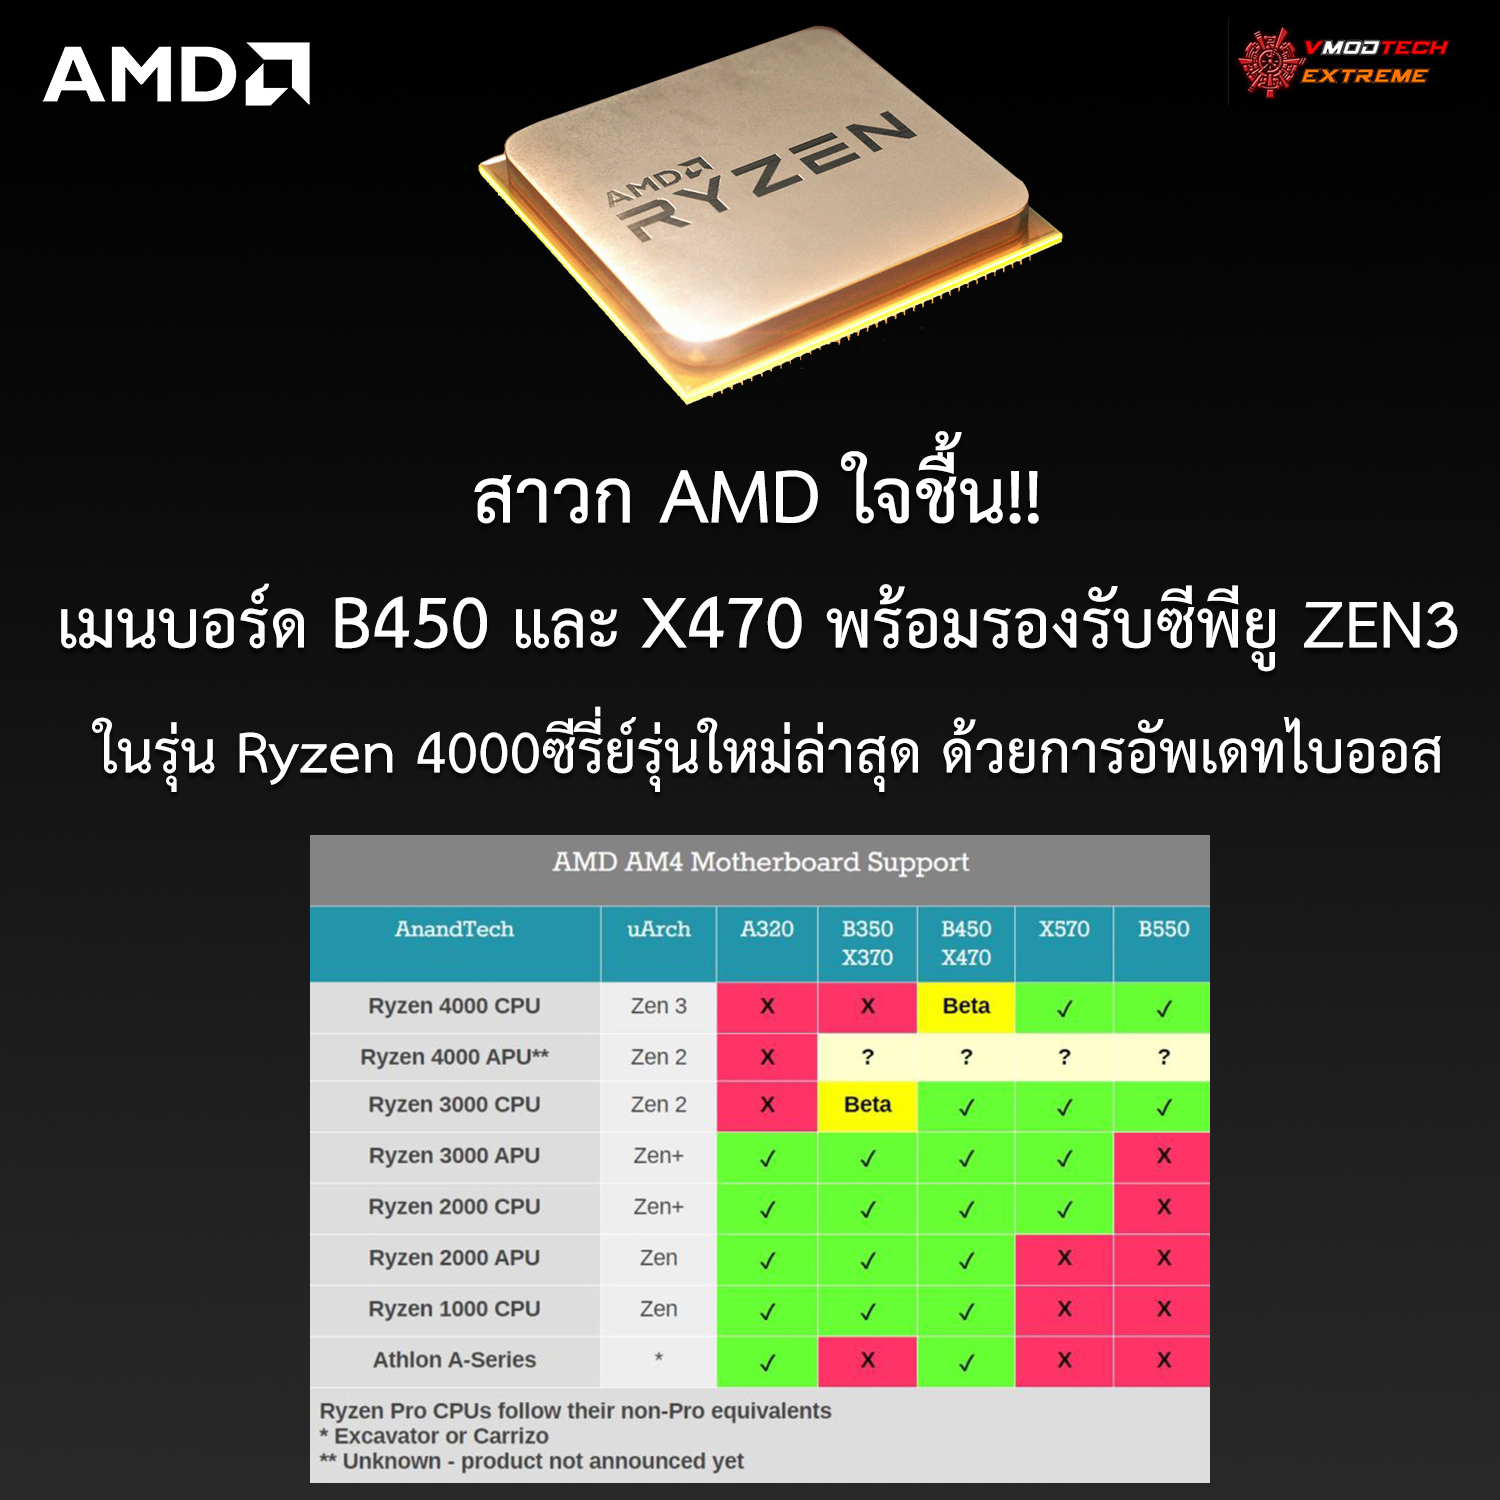 amd zen3 support b450 x470 สาวก AMD ใจชื้น!! เมนบอร์ด B450 และ X470 พร้อมรองรับซีพียู ZEN3 ในรุ่น Ryzen 4000ซีรี่ย์รุ่นใหม่ล่าสุด